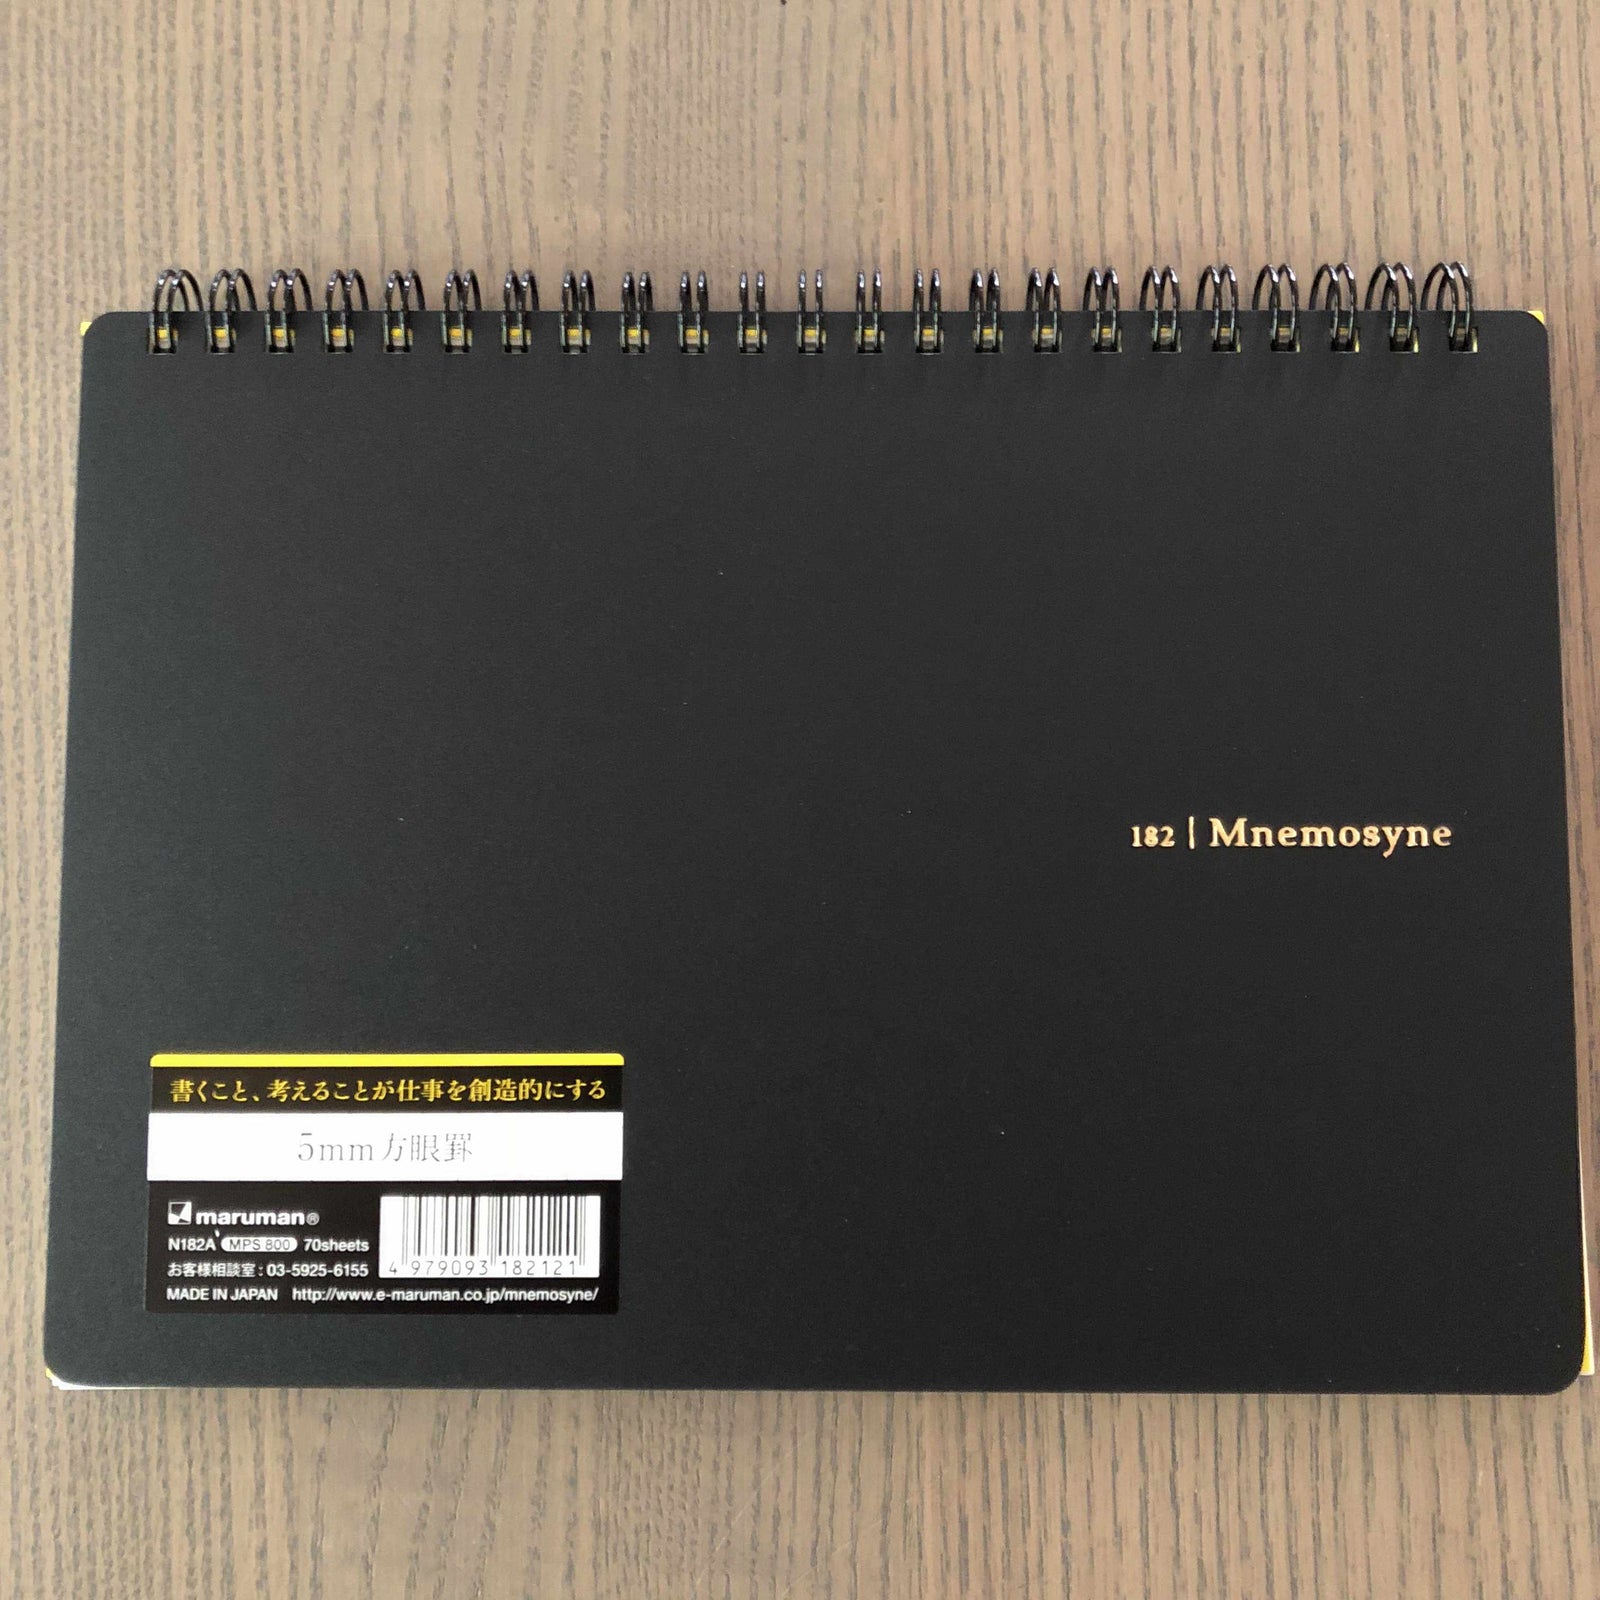 Maruman Notebook Mnemosyne 182 Grid A5 Notebook